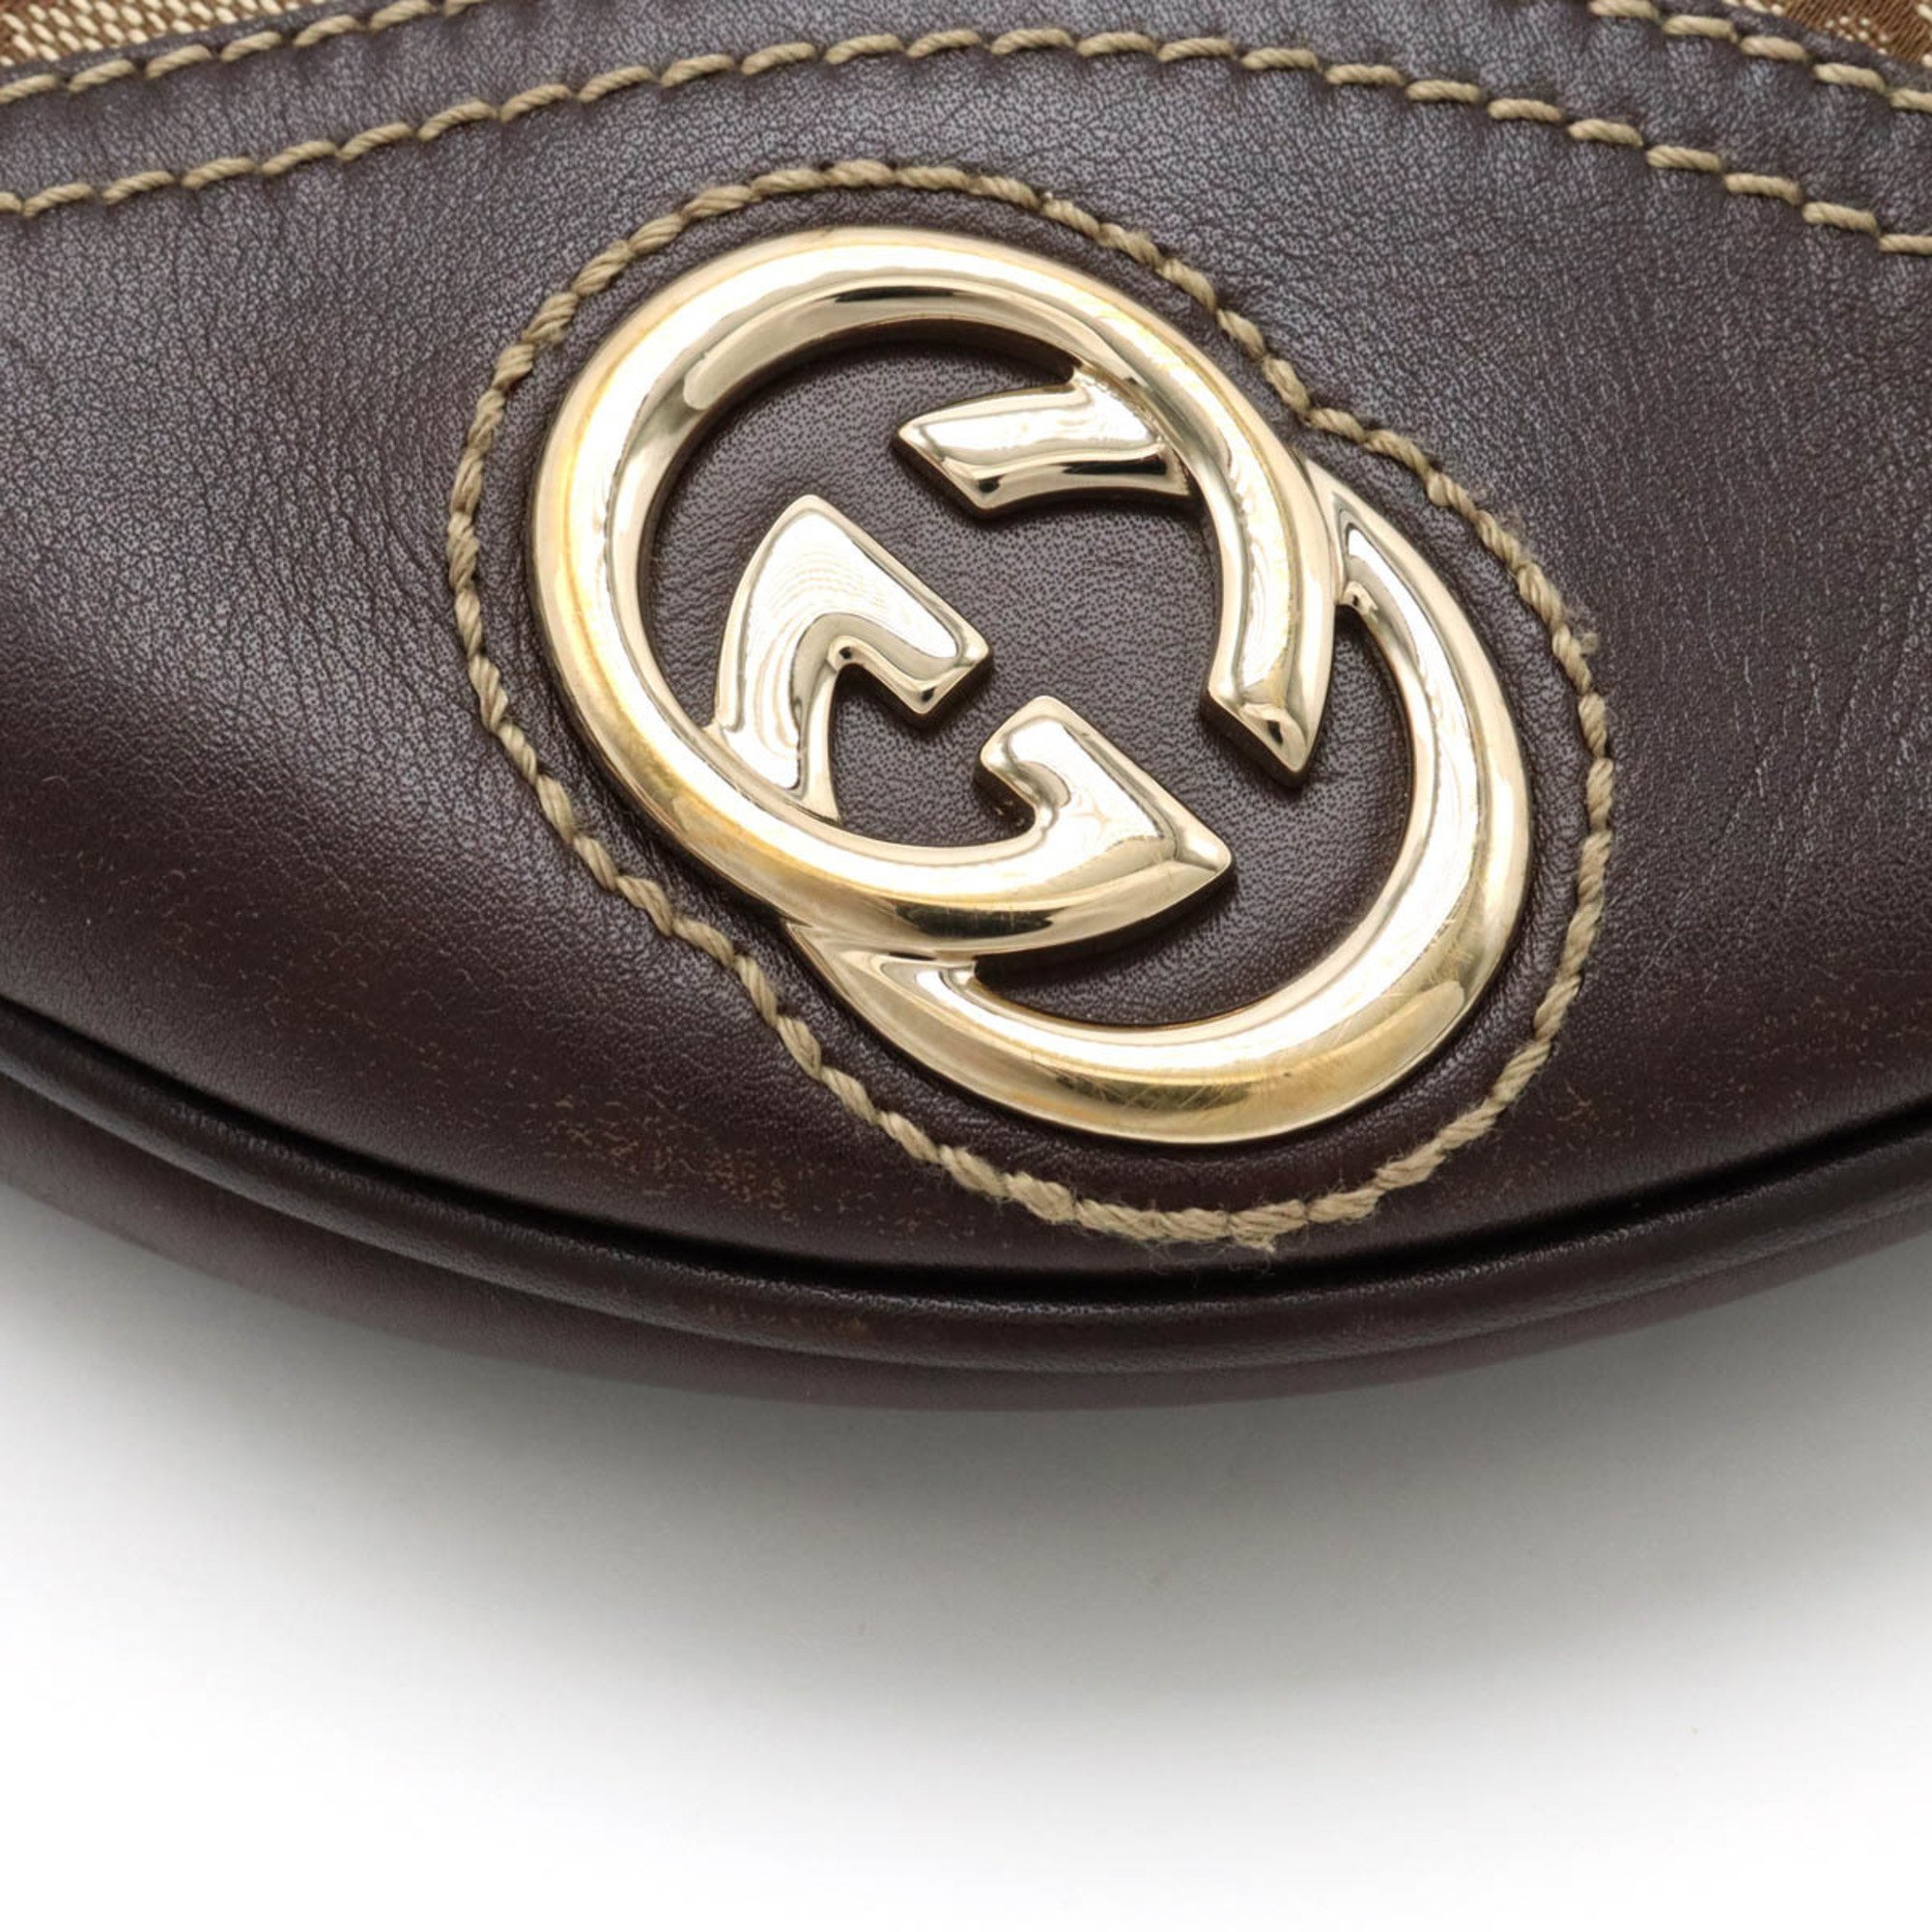 GUCCI GG canvas shoulder bag leather khaki beige dark brown 169998